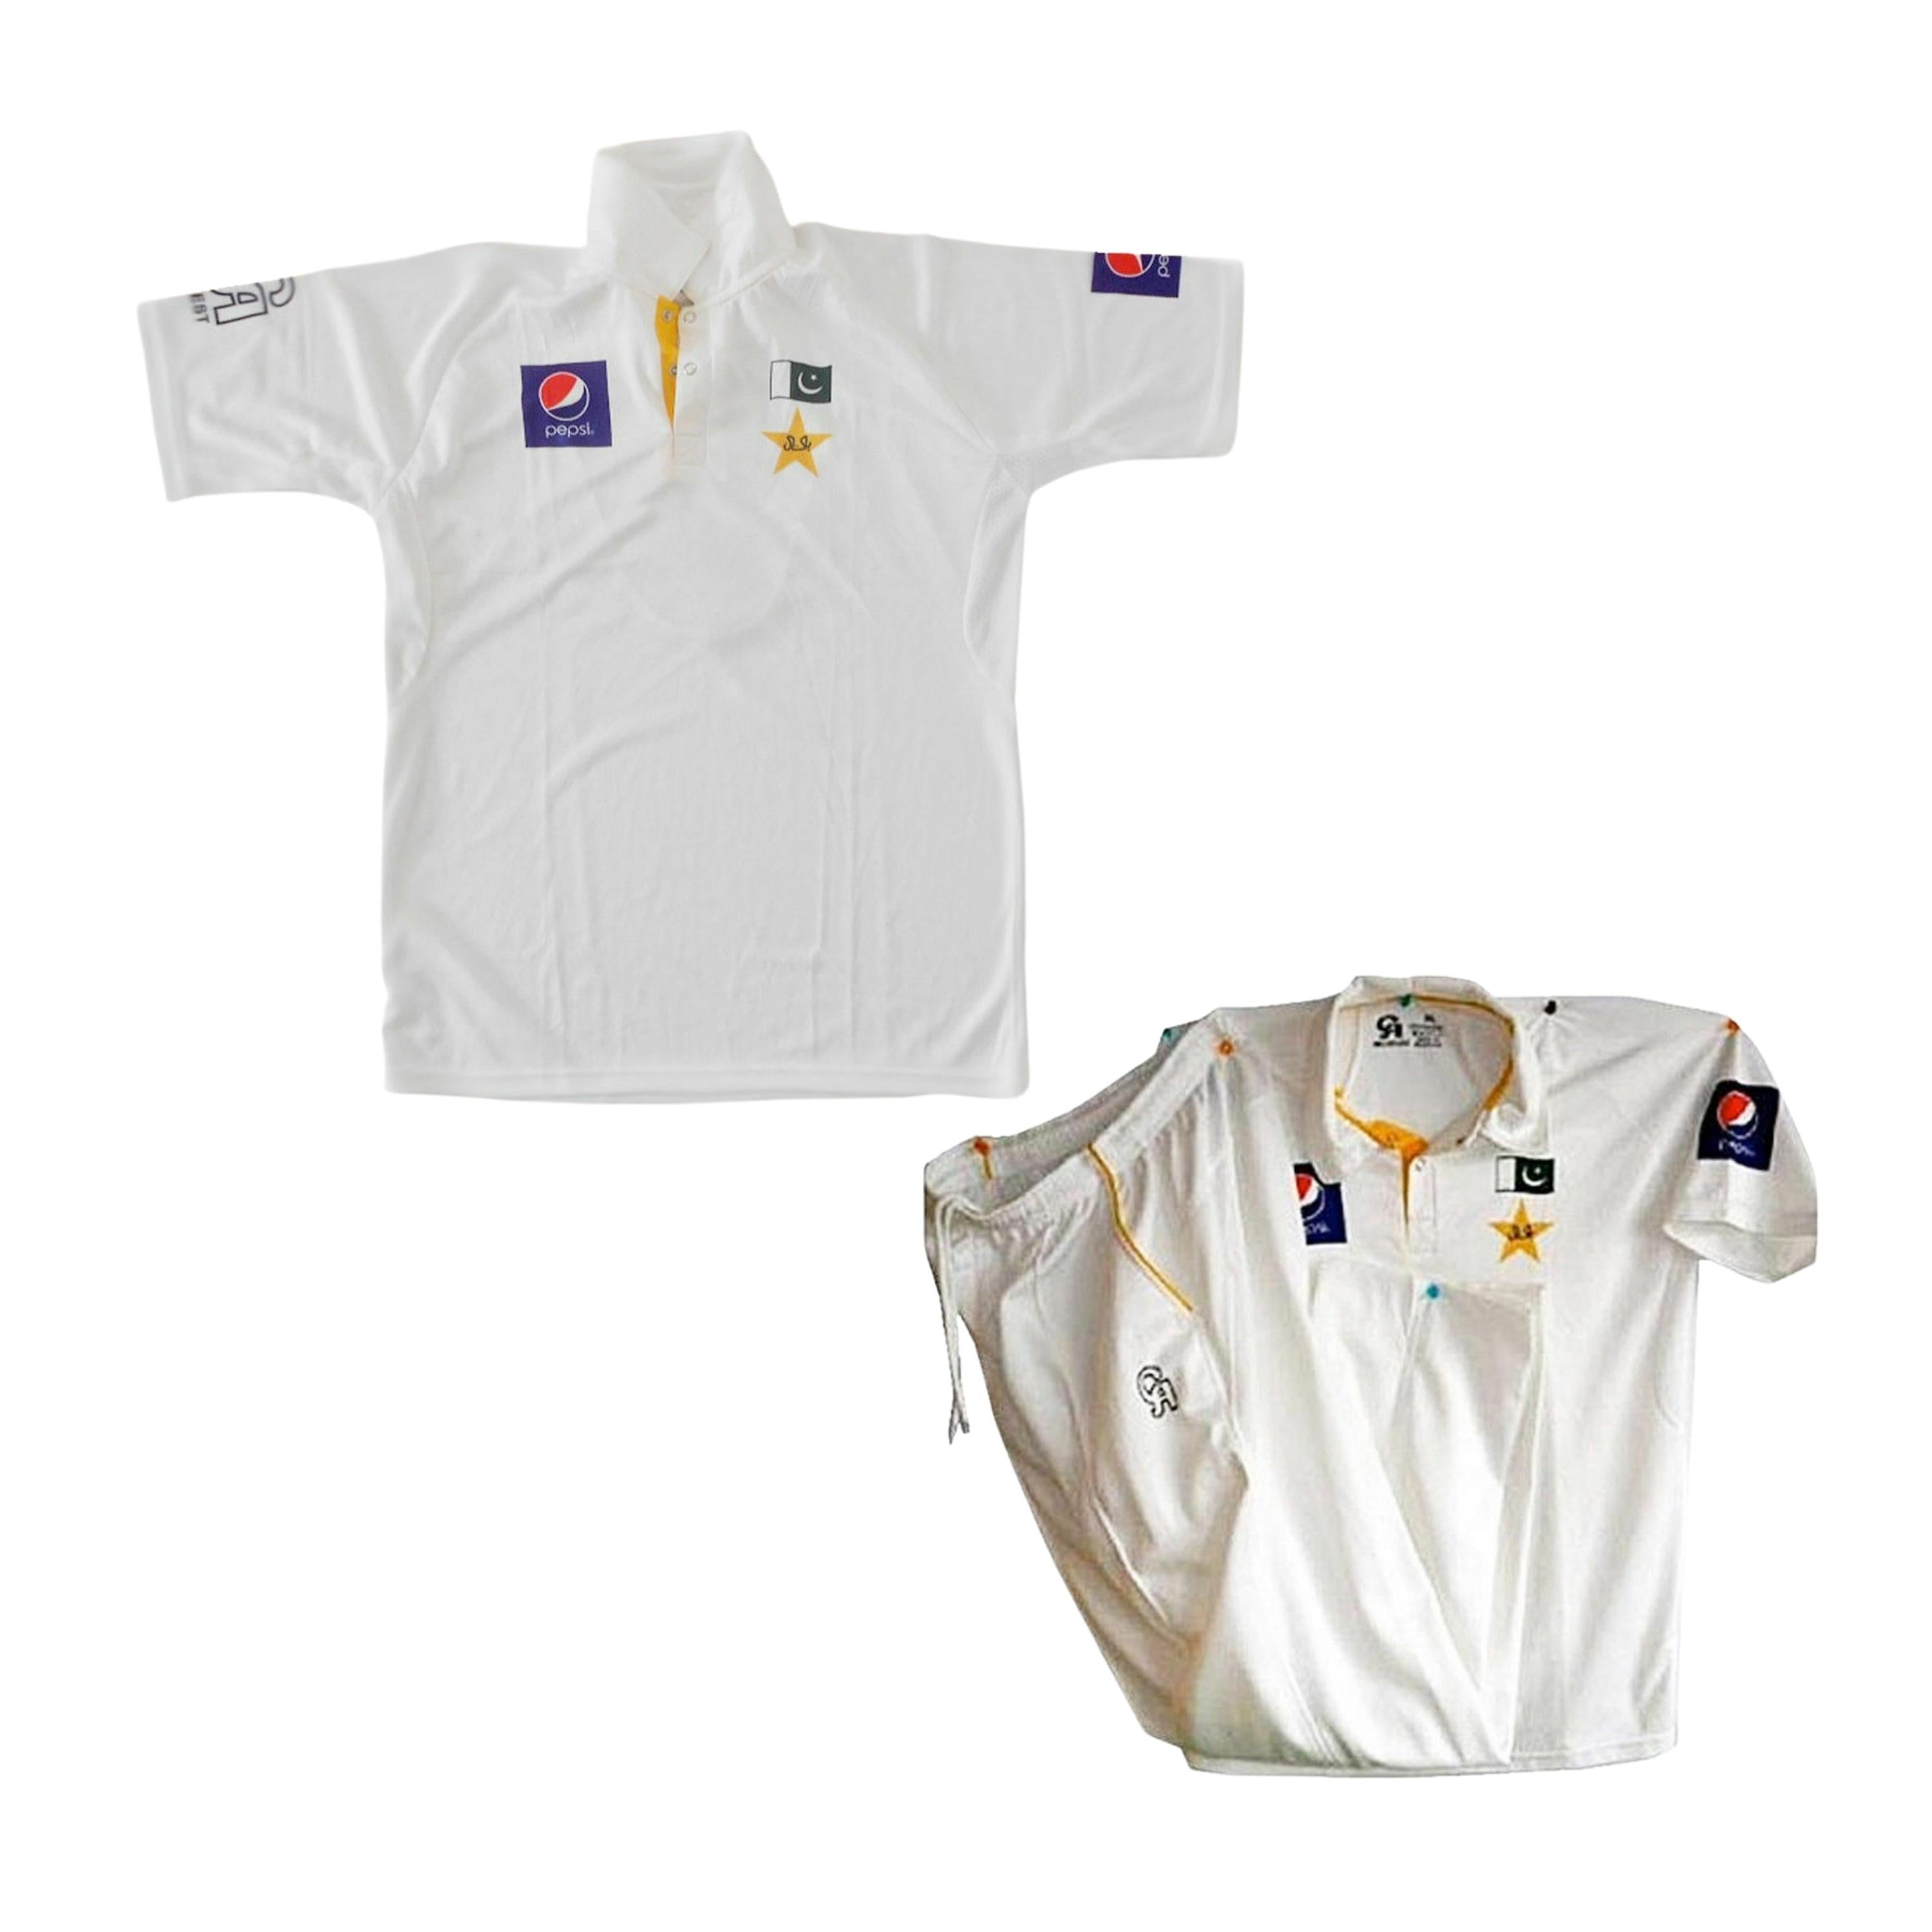 048 | CA Cricket Uniform White